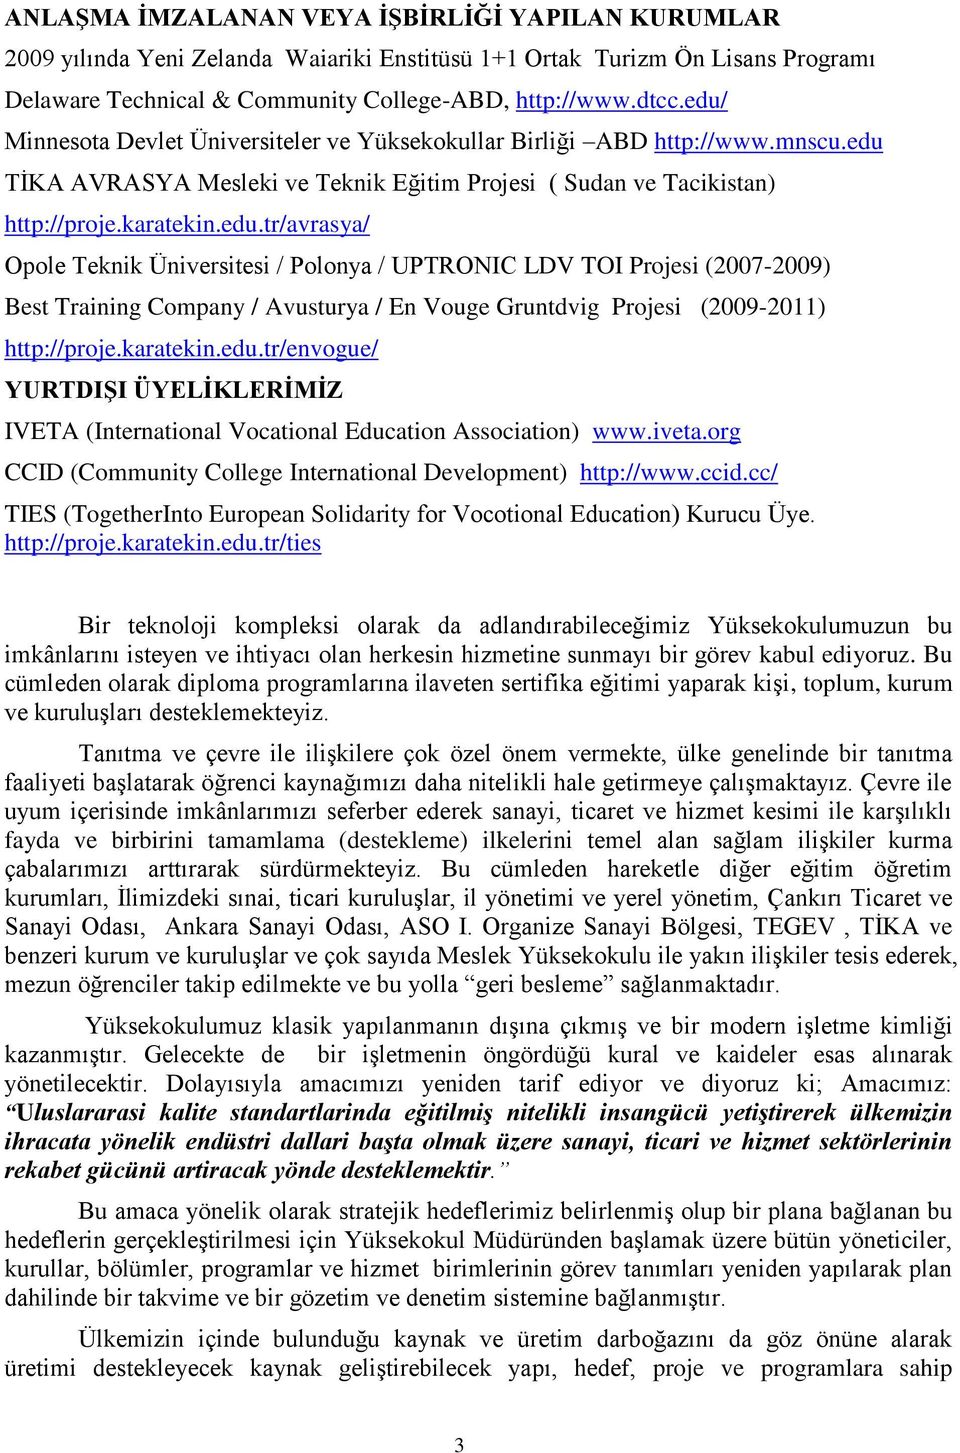 karatekin.edu.tr/envogue/ YURTDIġI ÜYELĠKLERĠMĠZ IVETA (International Vocational Education Association) www.iveta.org CCID (Community College International Development) http://www.ccid.